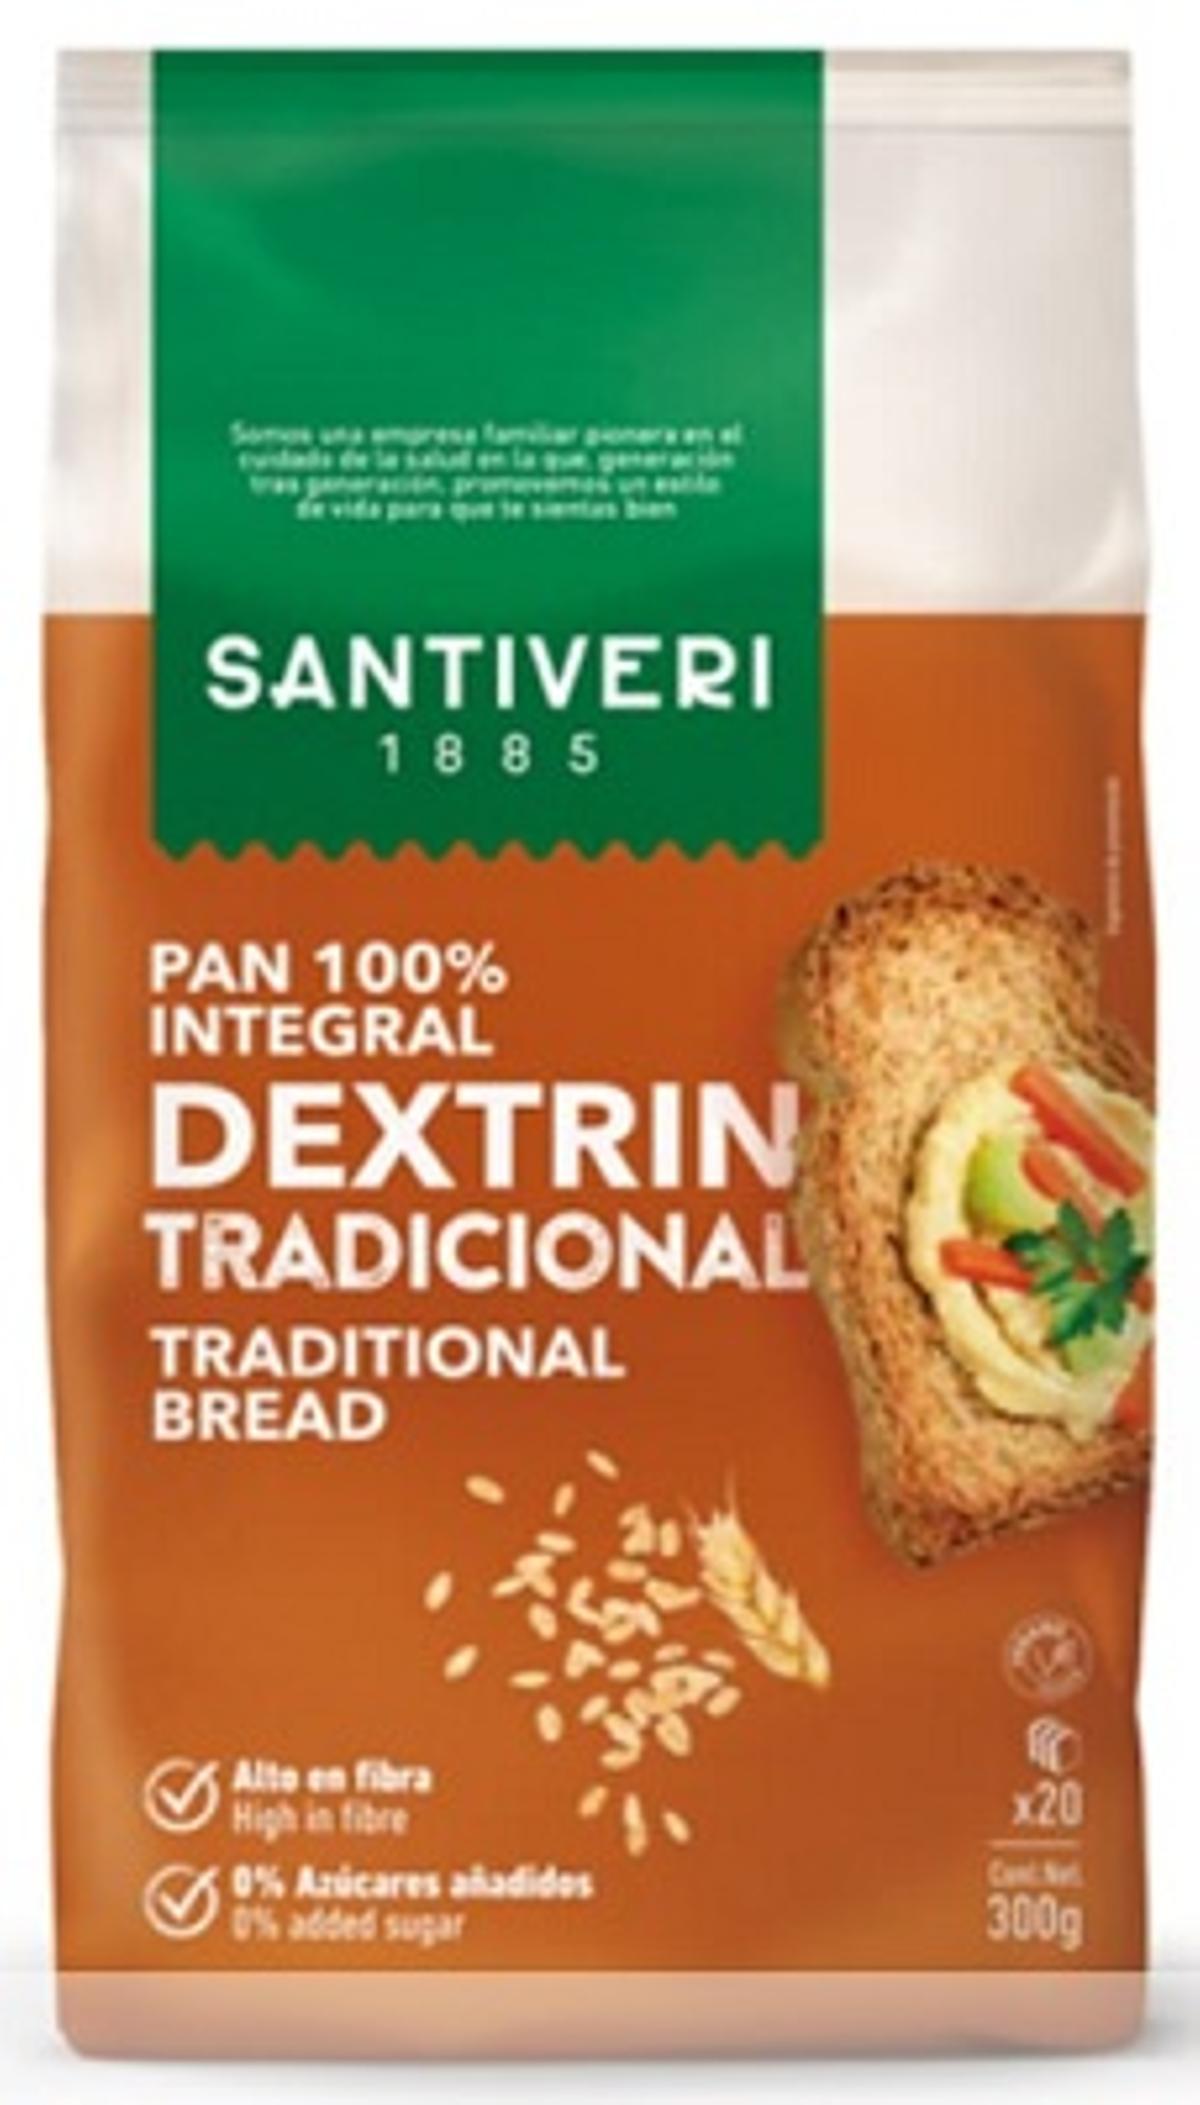 Pan integral Dextrin Tradicional.